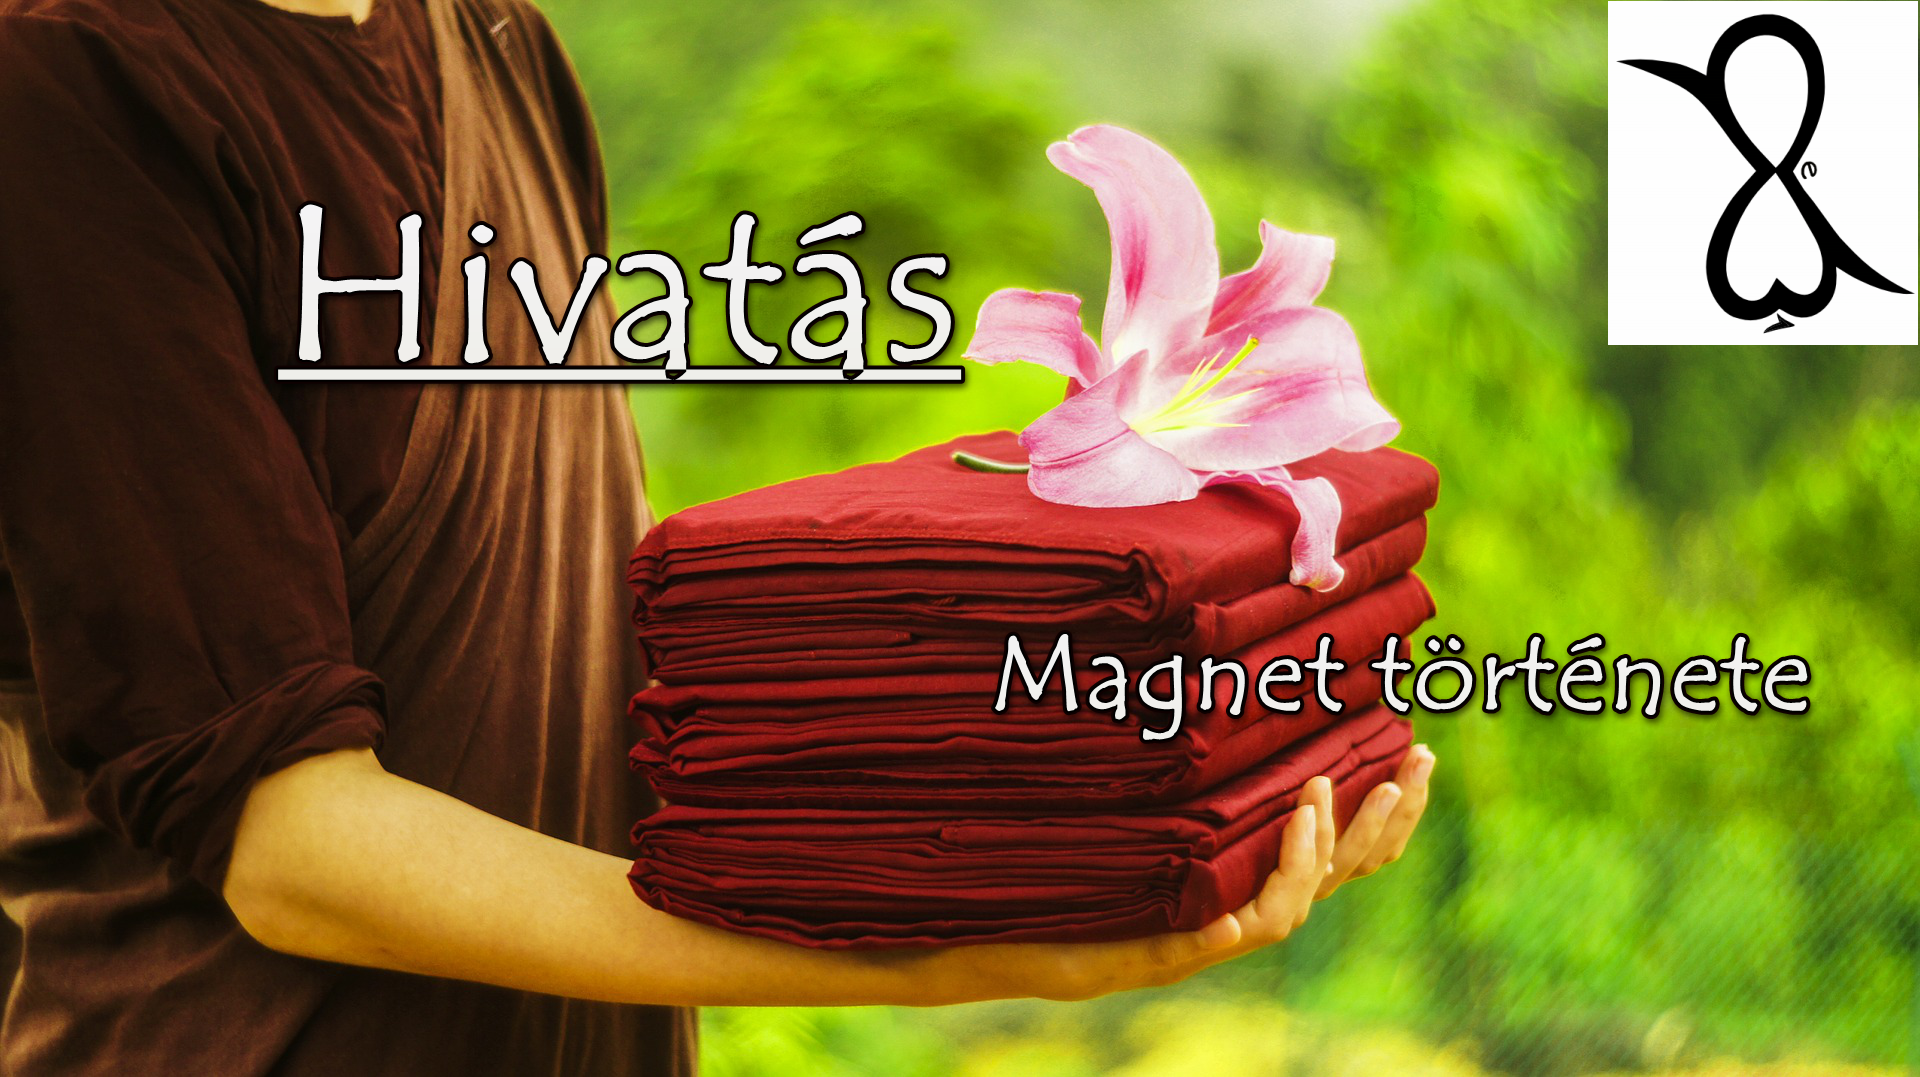 You are currently viewing Hivatás (Magnet története)